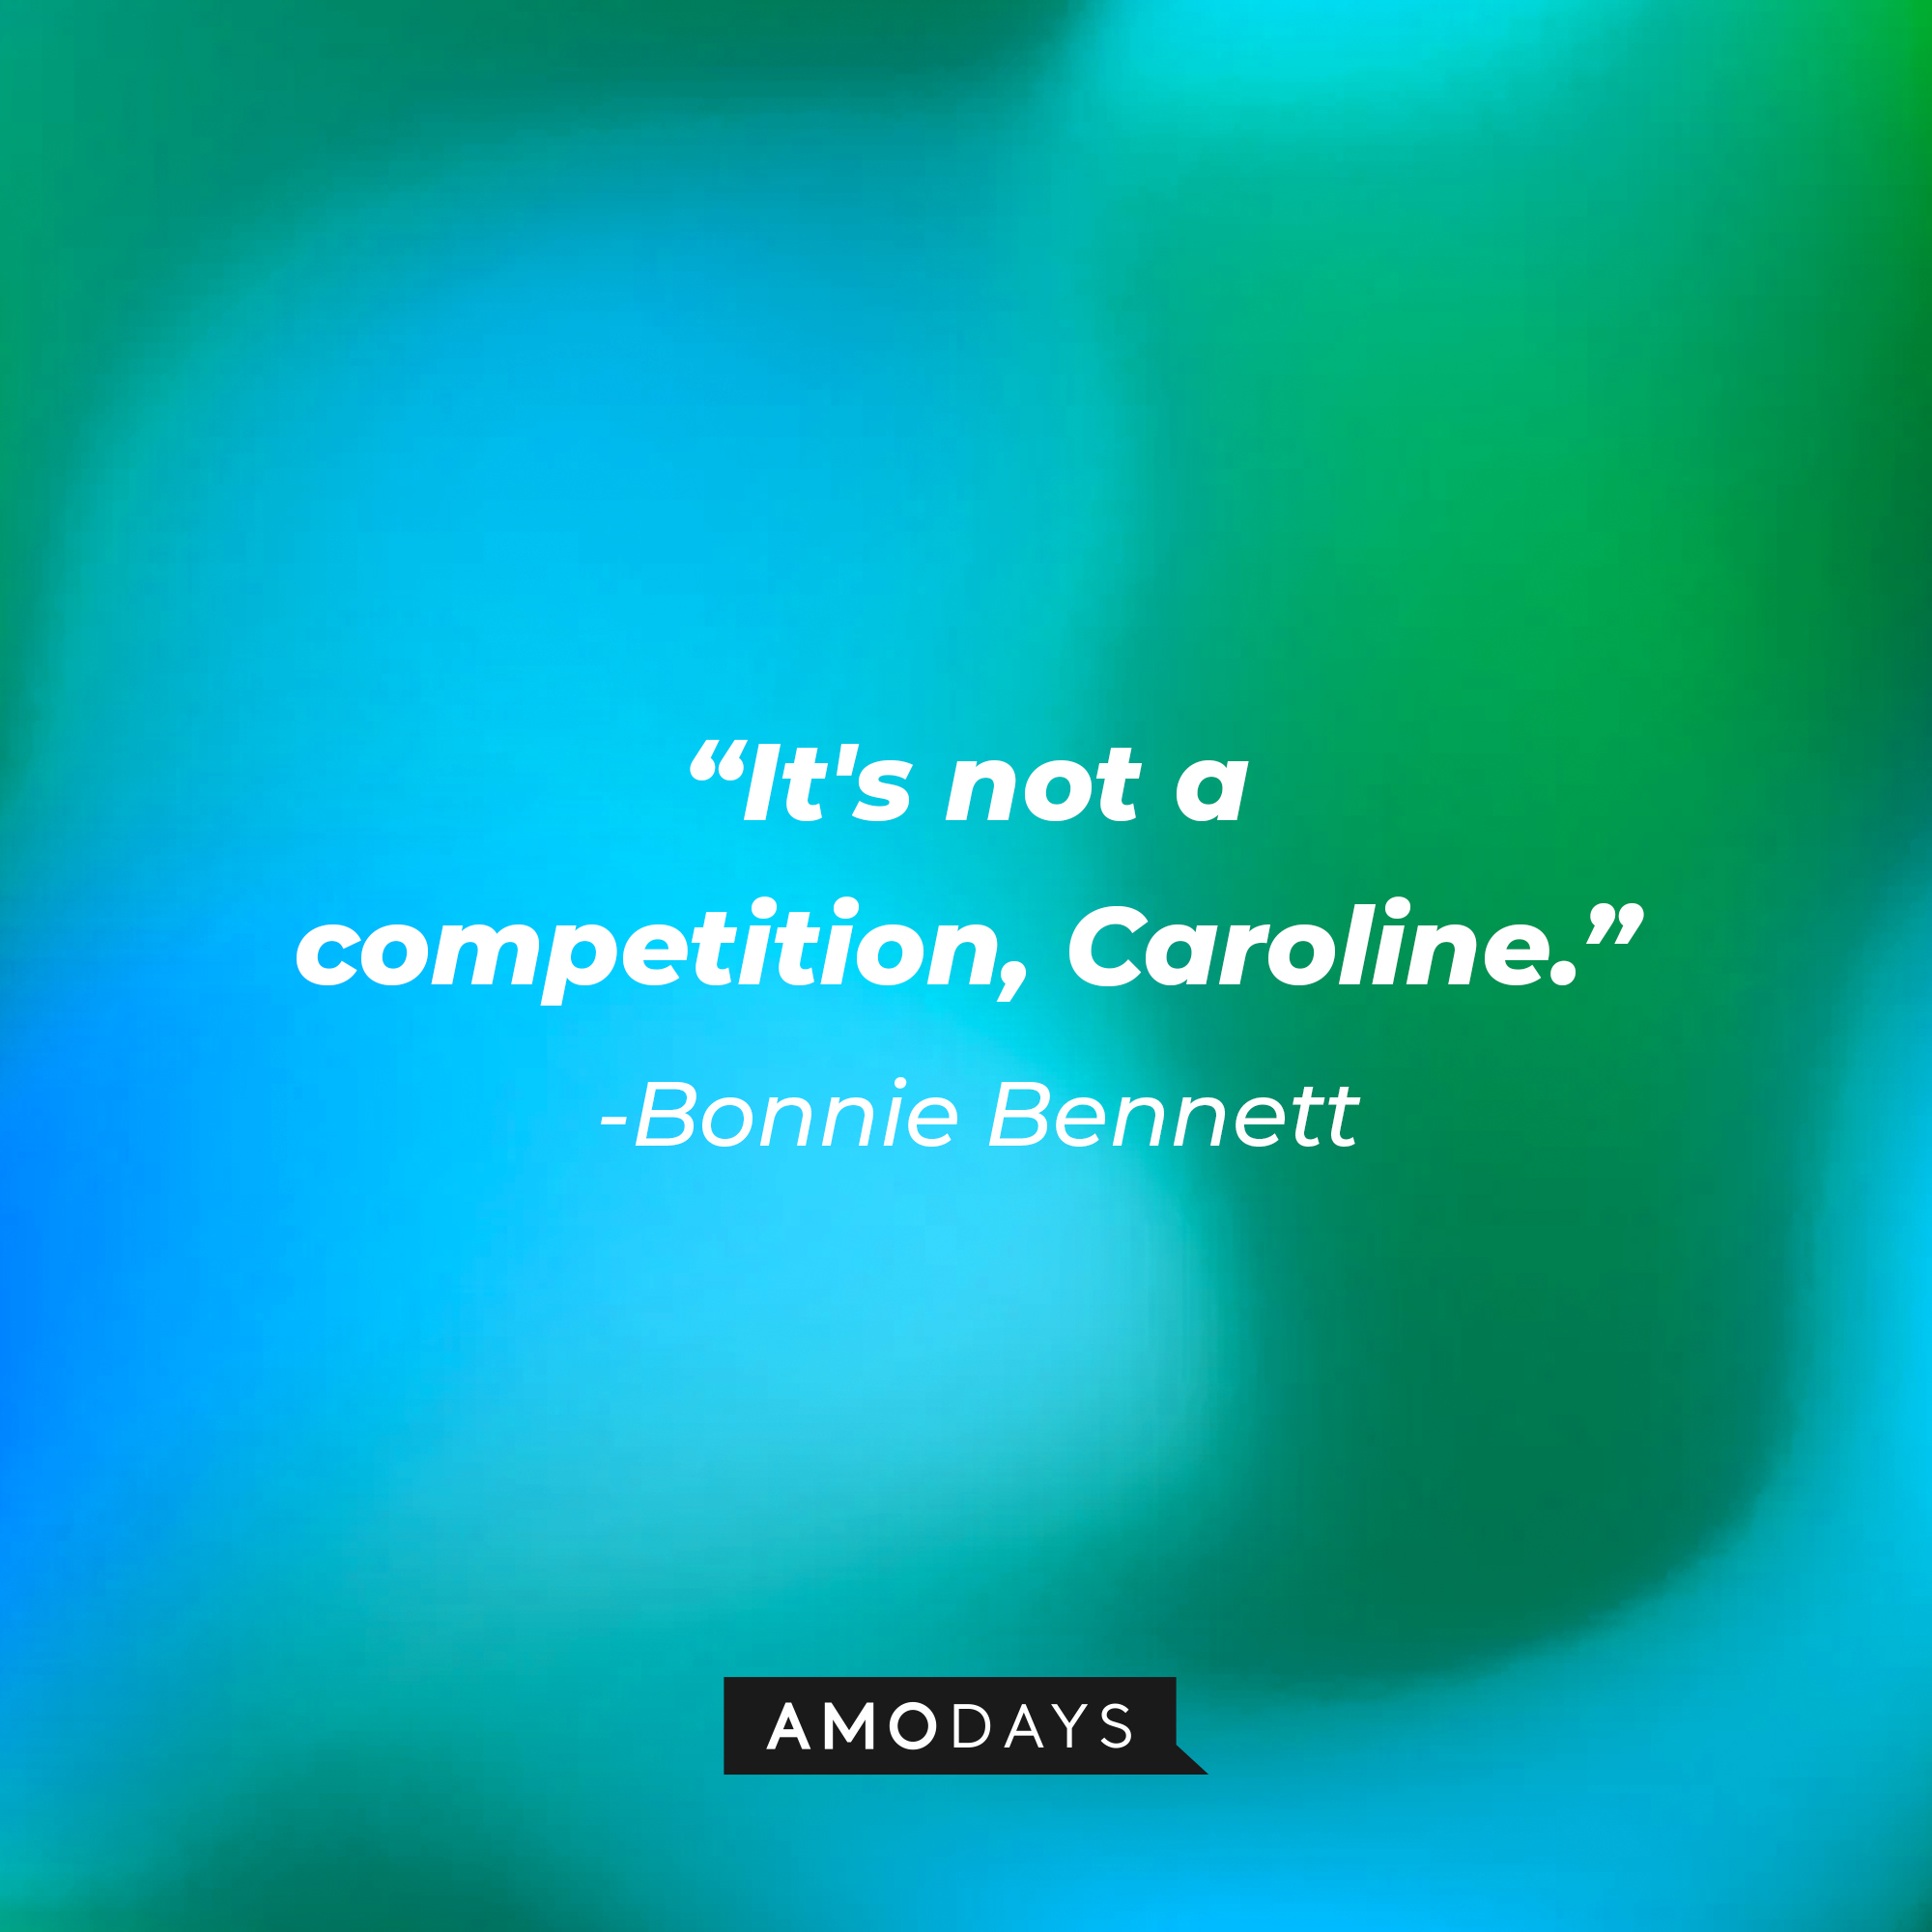 Bonnie Bennett’s quote: “It's not a competition, Caroline.” | Source: AmoDays